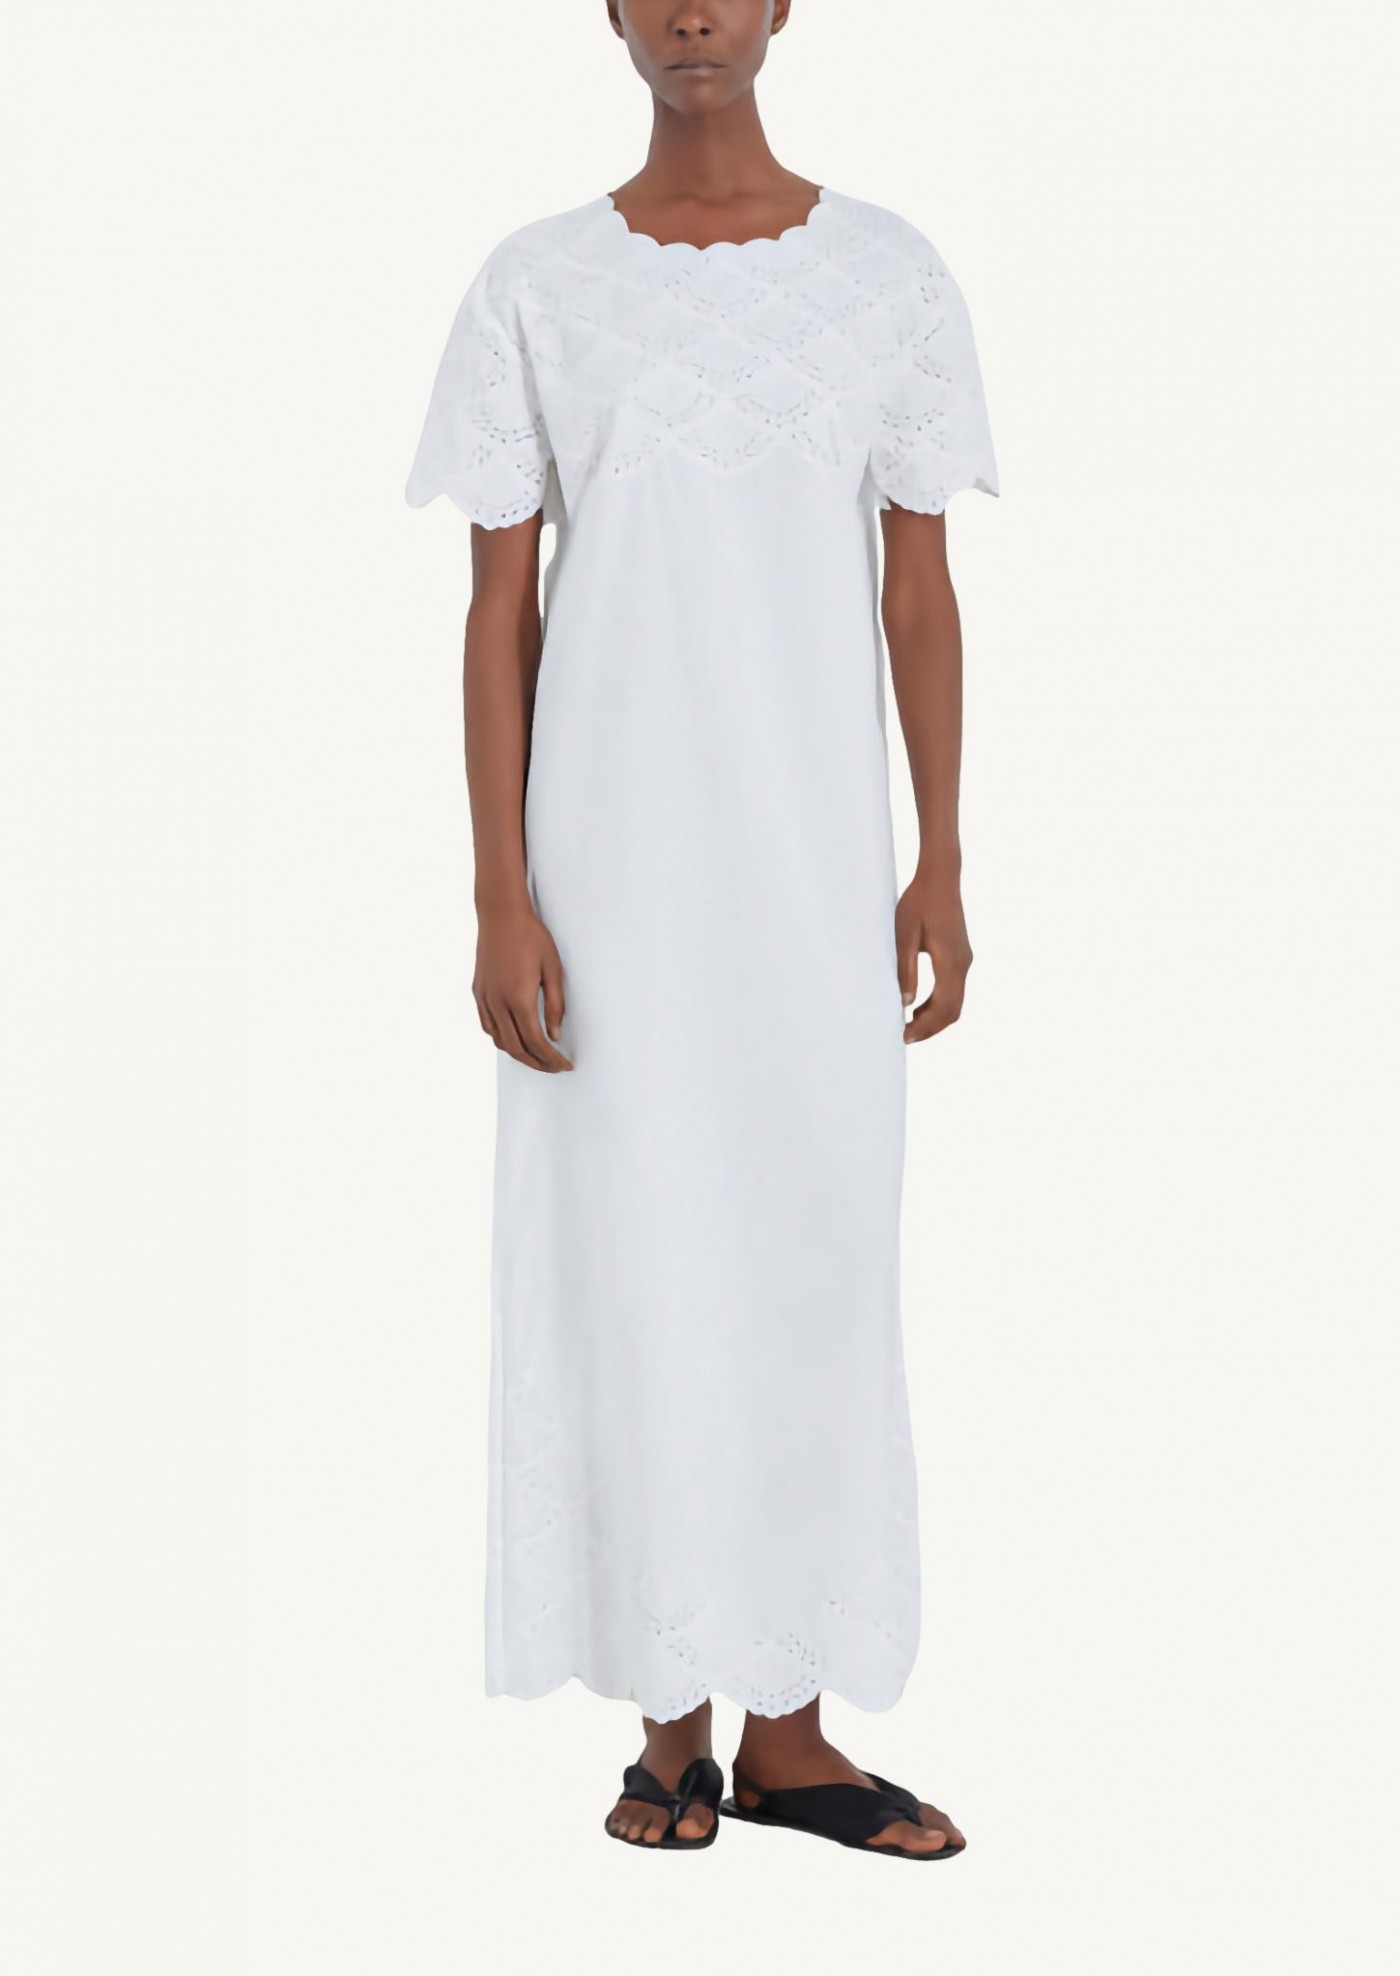 Ivory cotton poplin dress